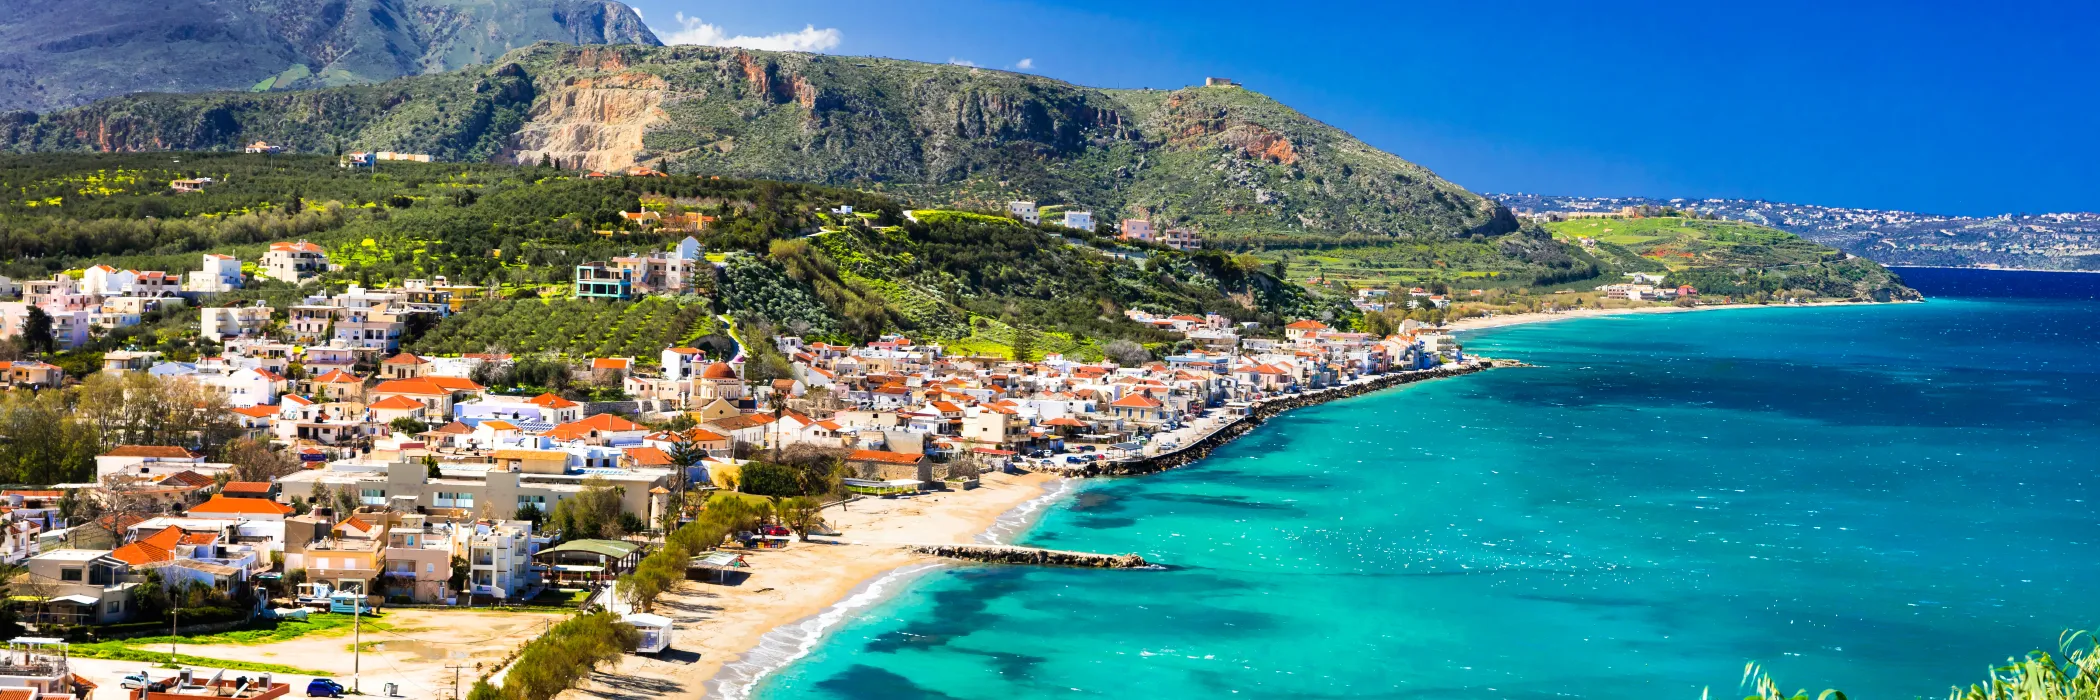 Travel Insurance - Crete